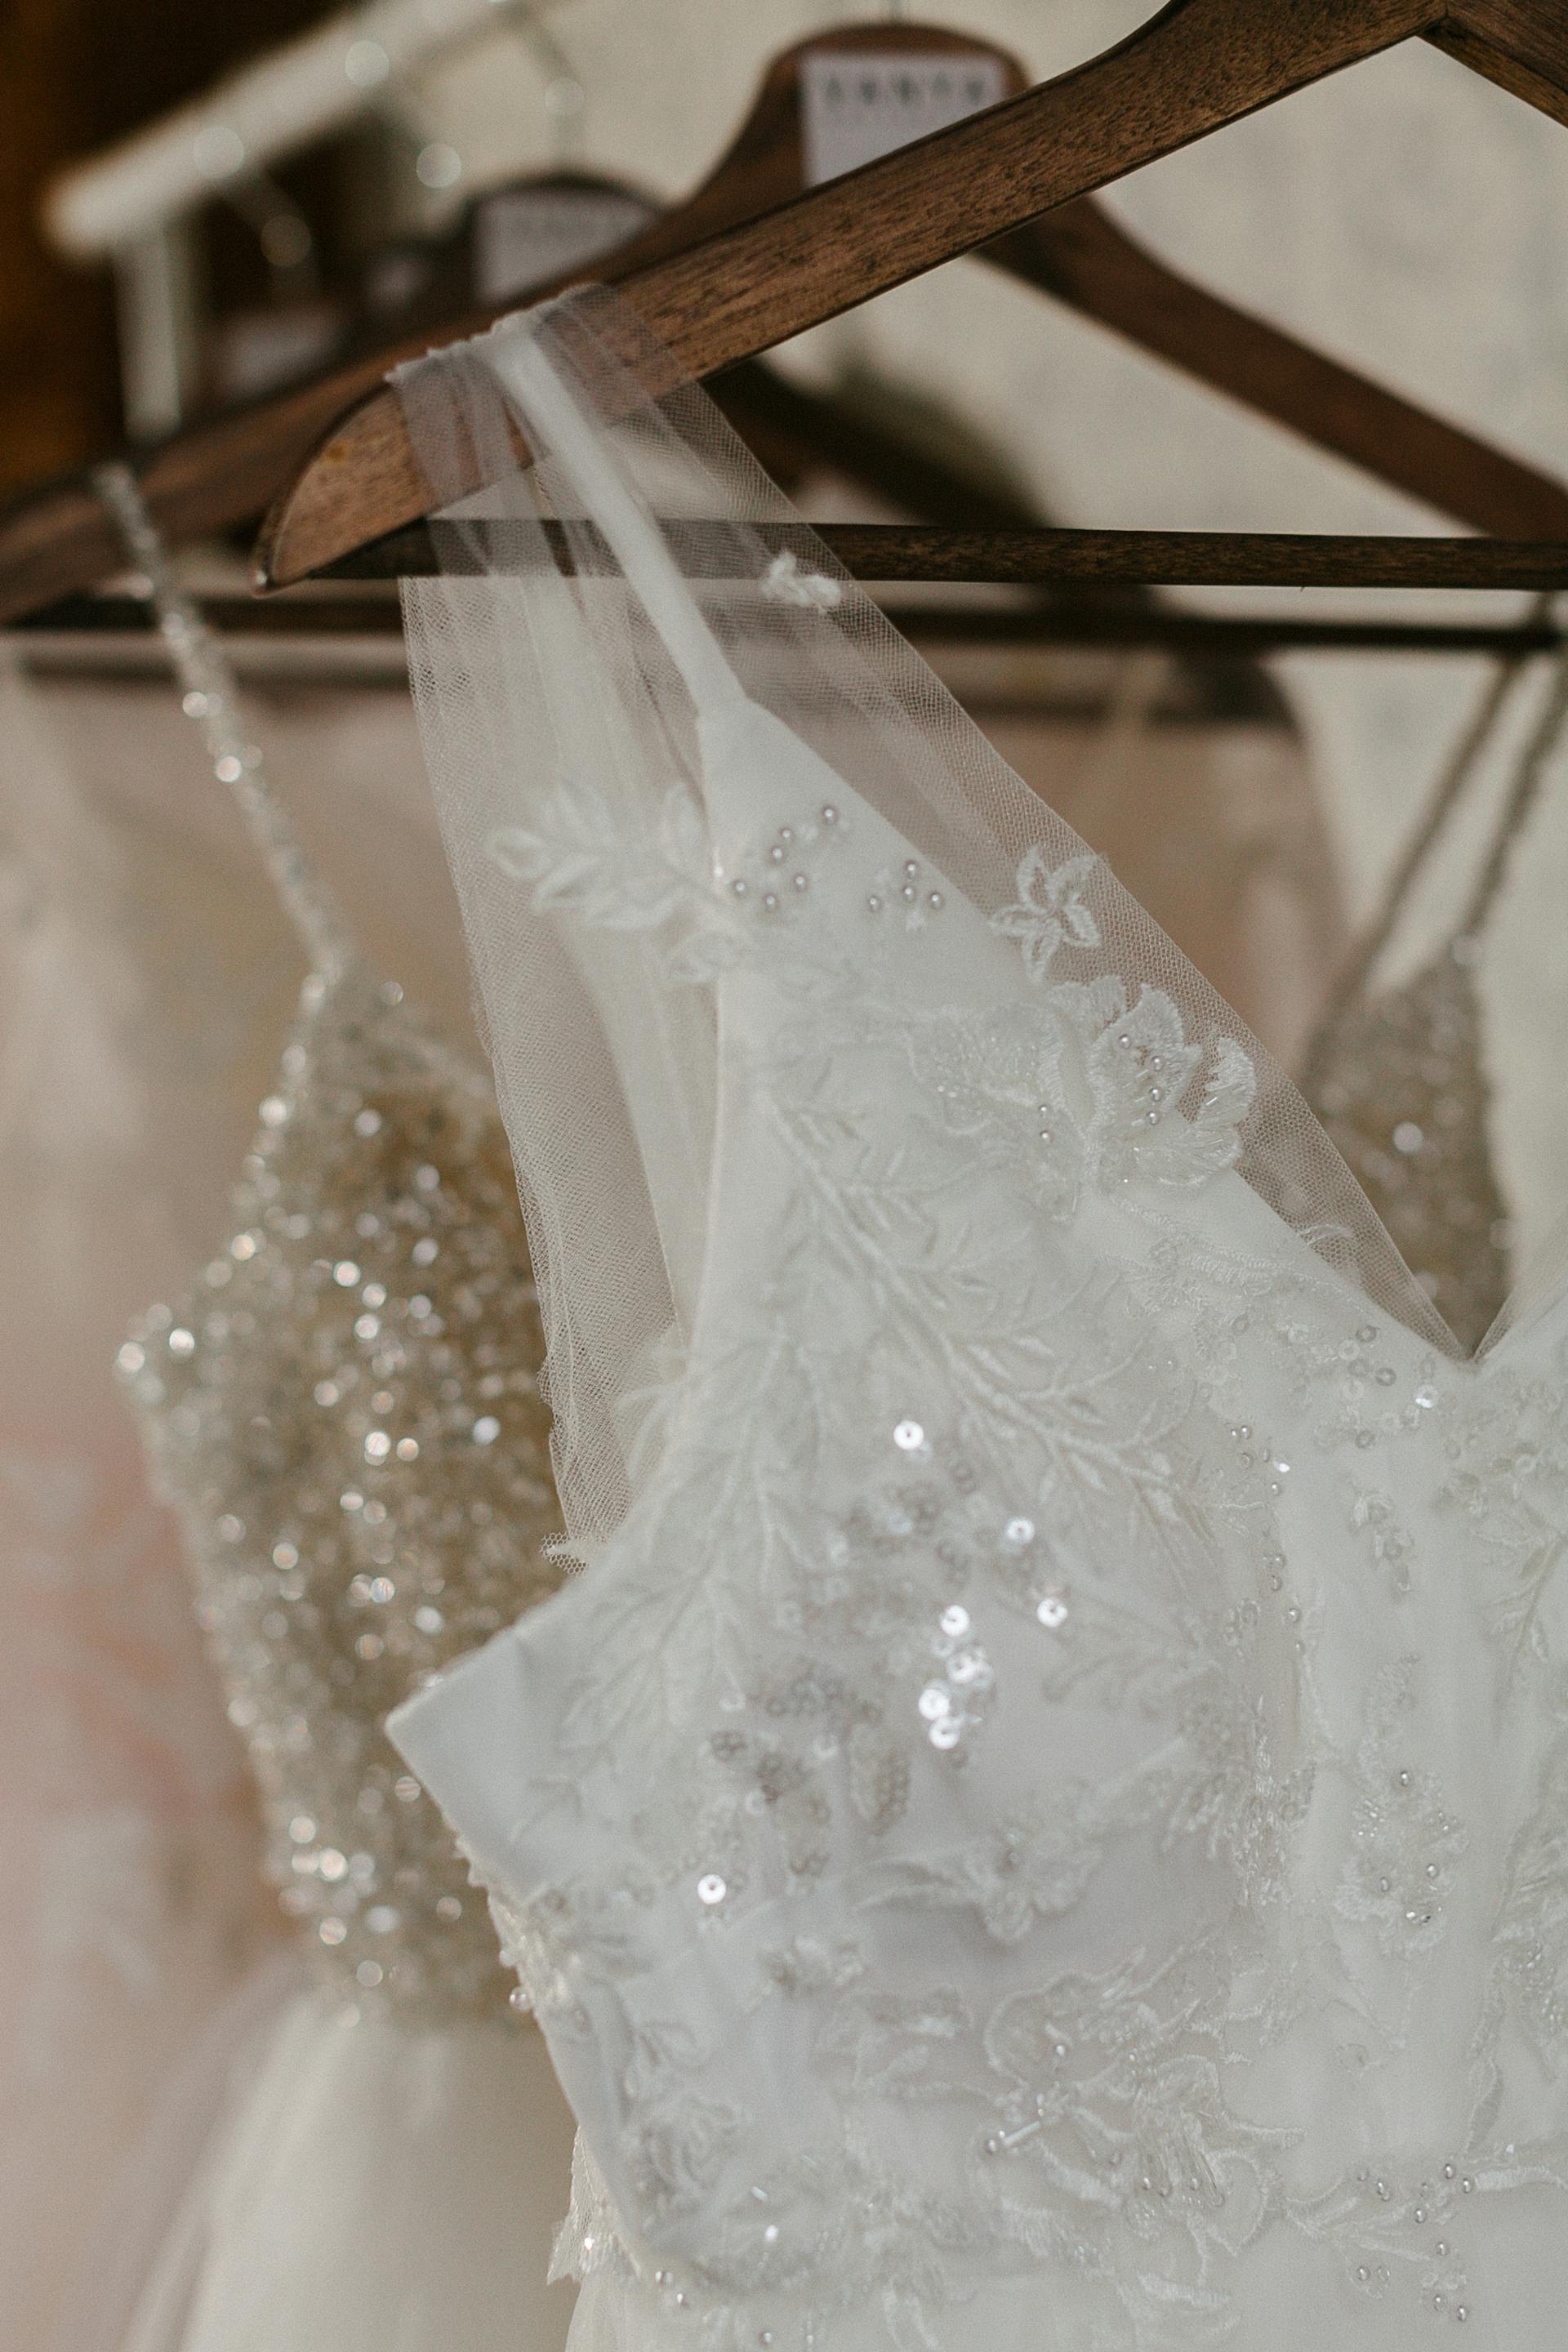 Wedding dresses on hangers | Source: Pexels